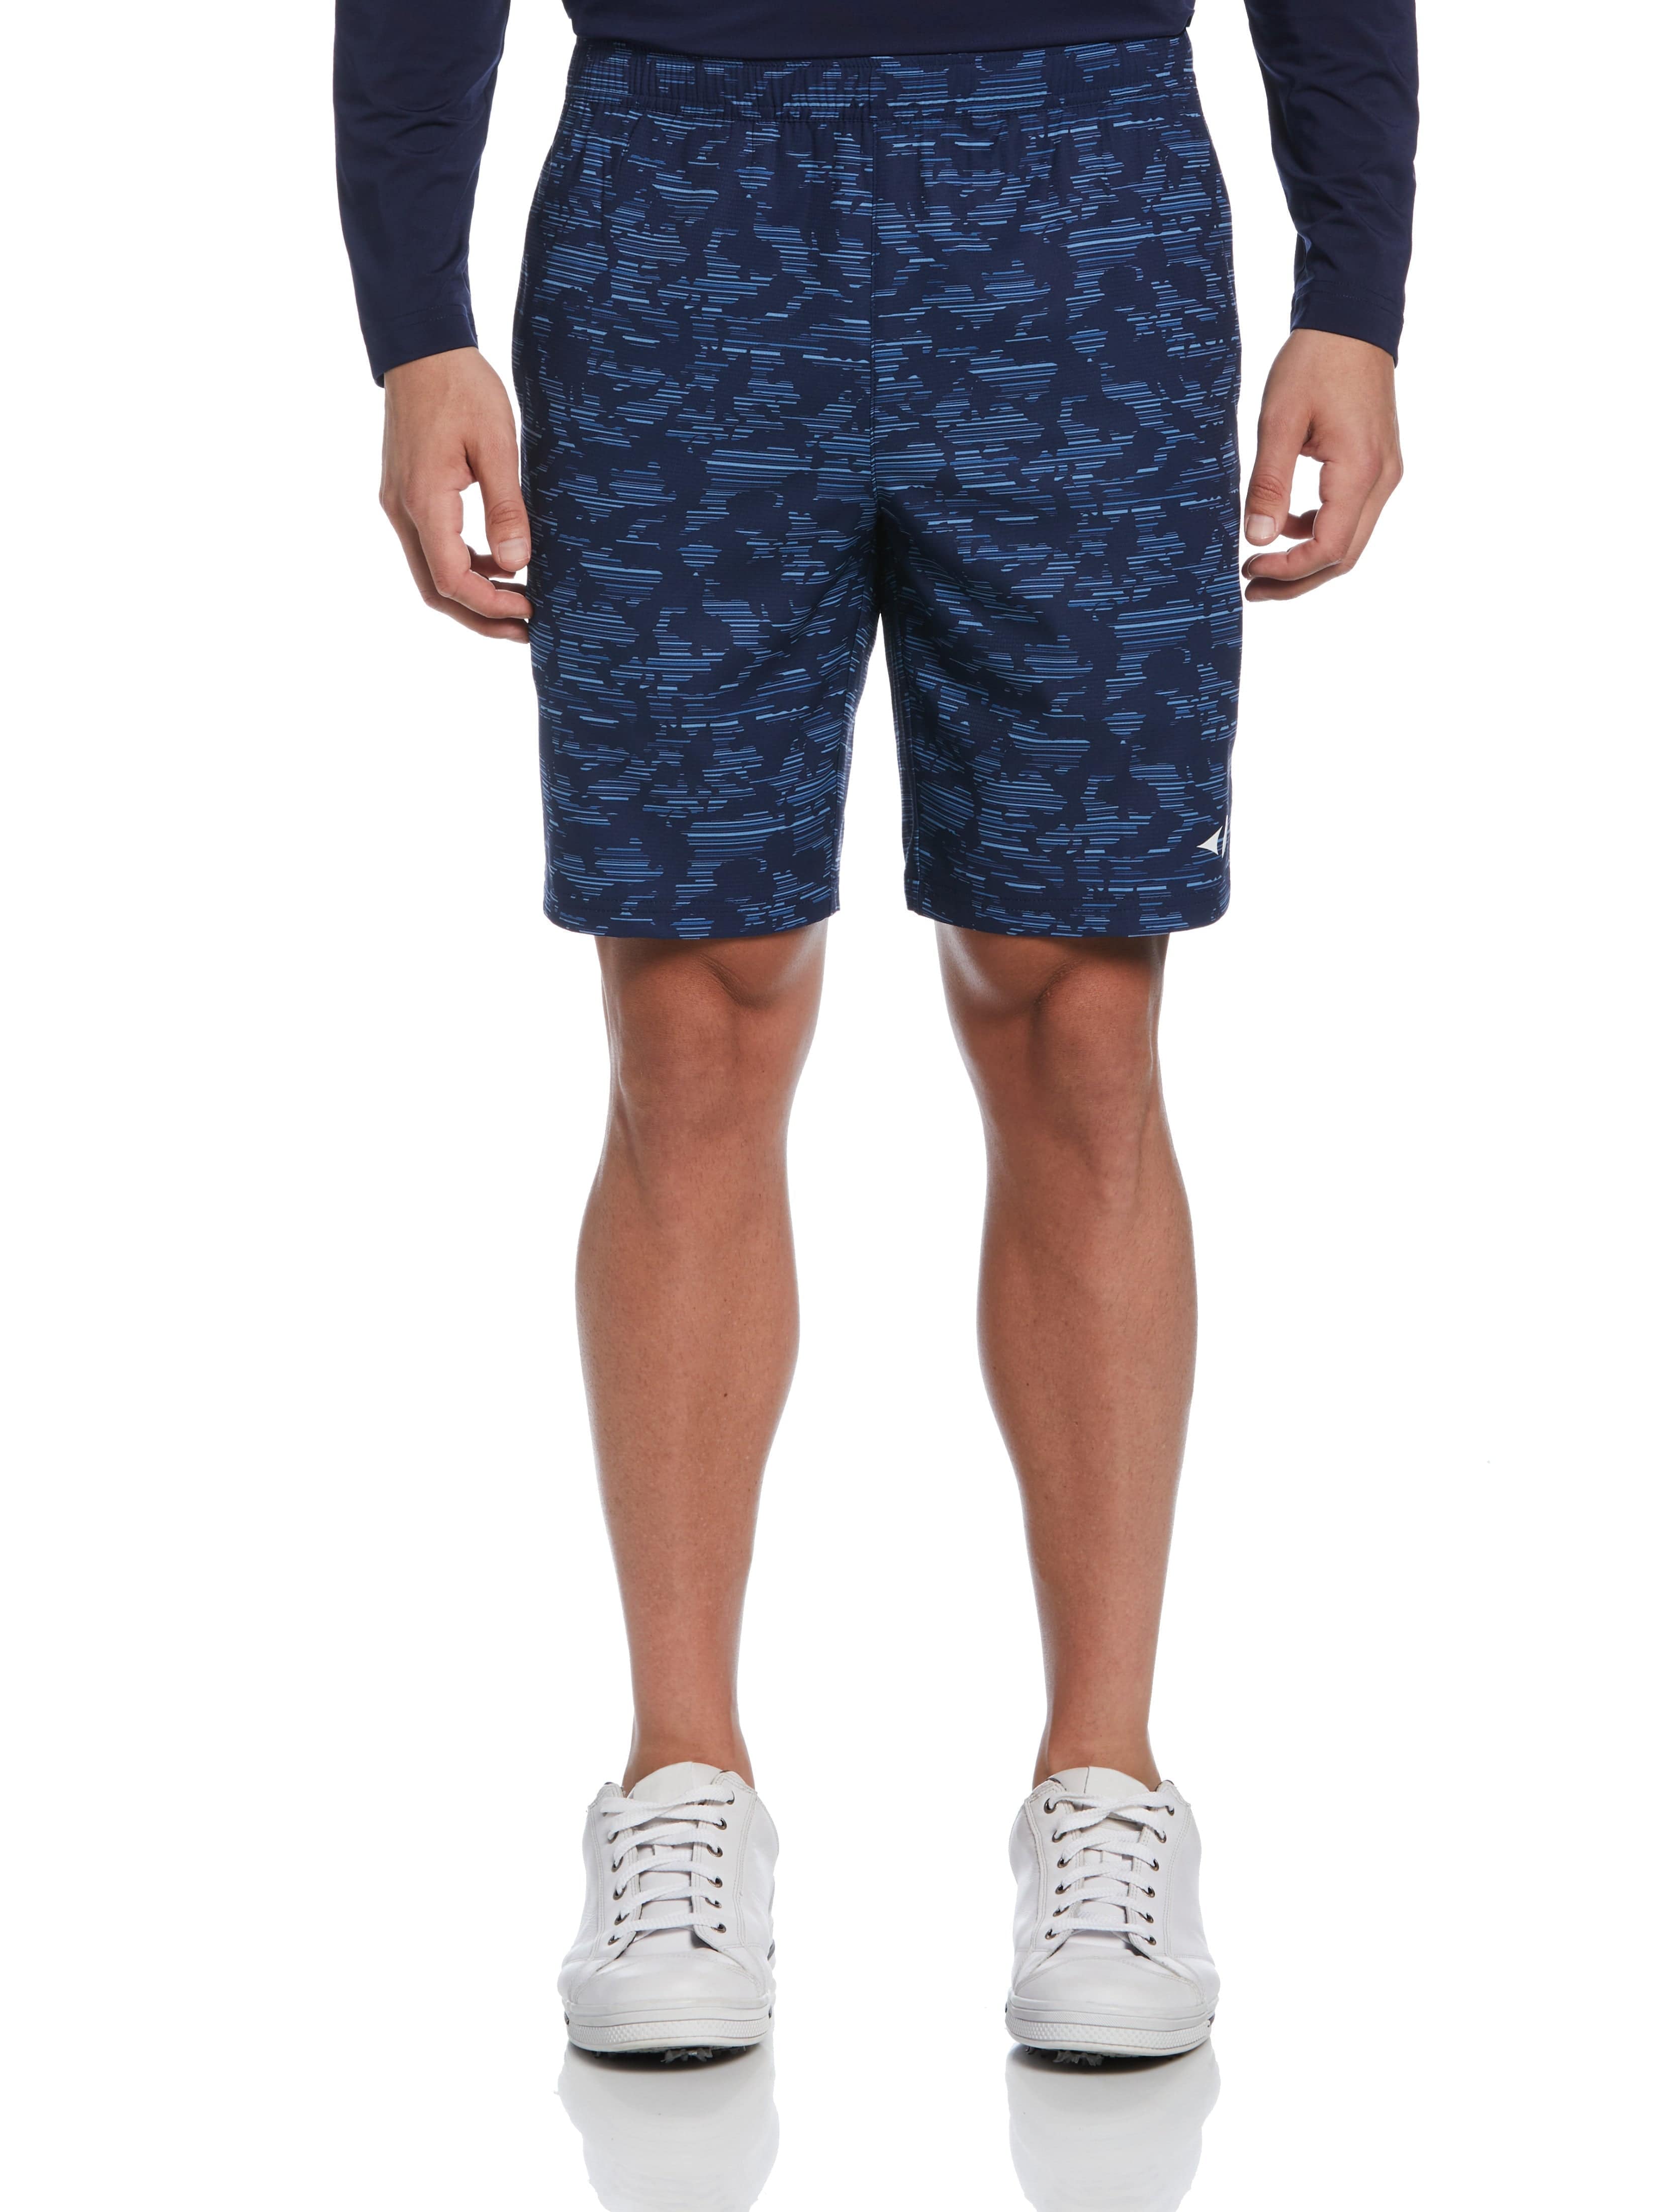 Grand Slam Mens Camo Printed Tennis Short, Size Medium, Navy Blue, Polyester/Elastane | Golf Apparel Shop